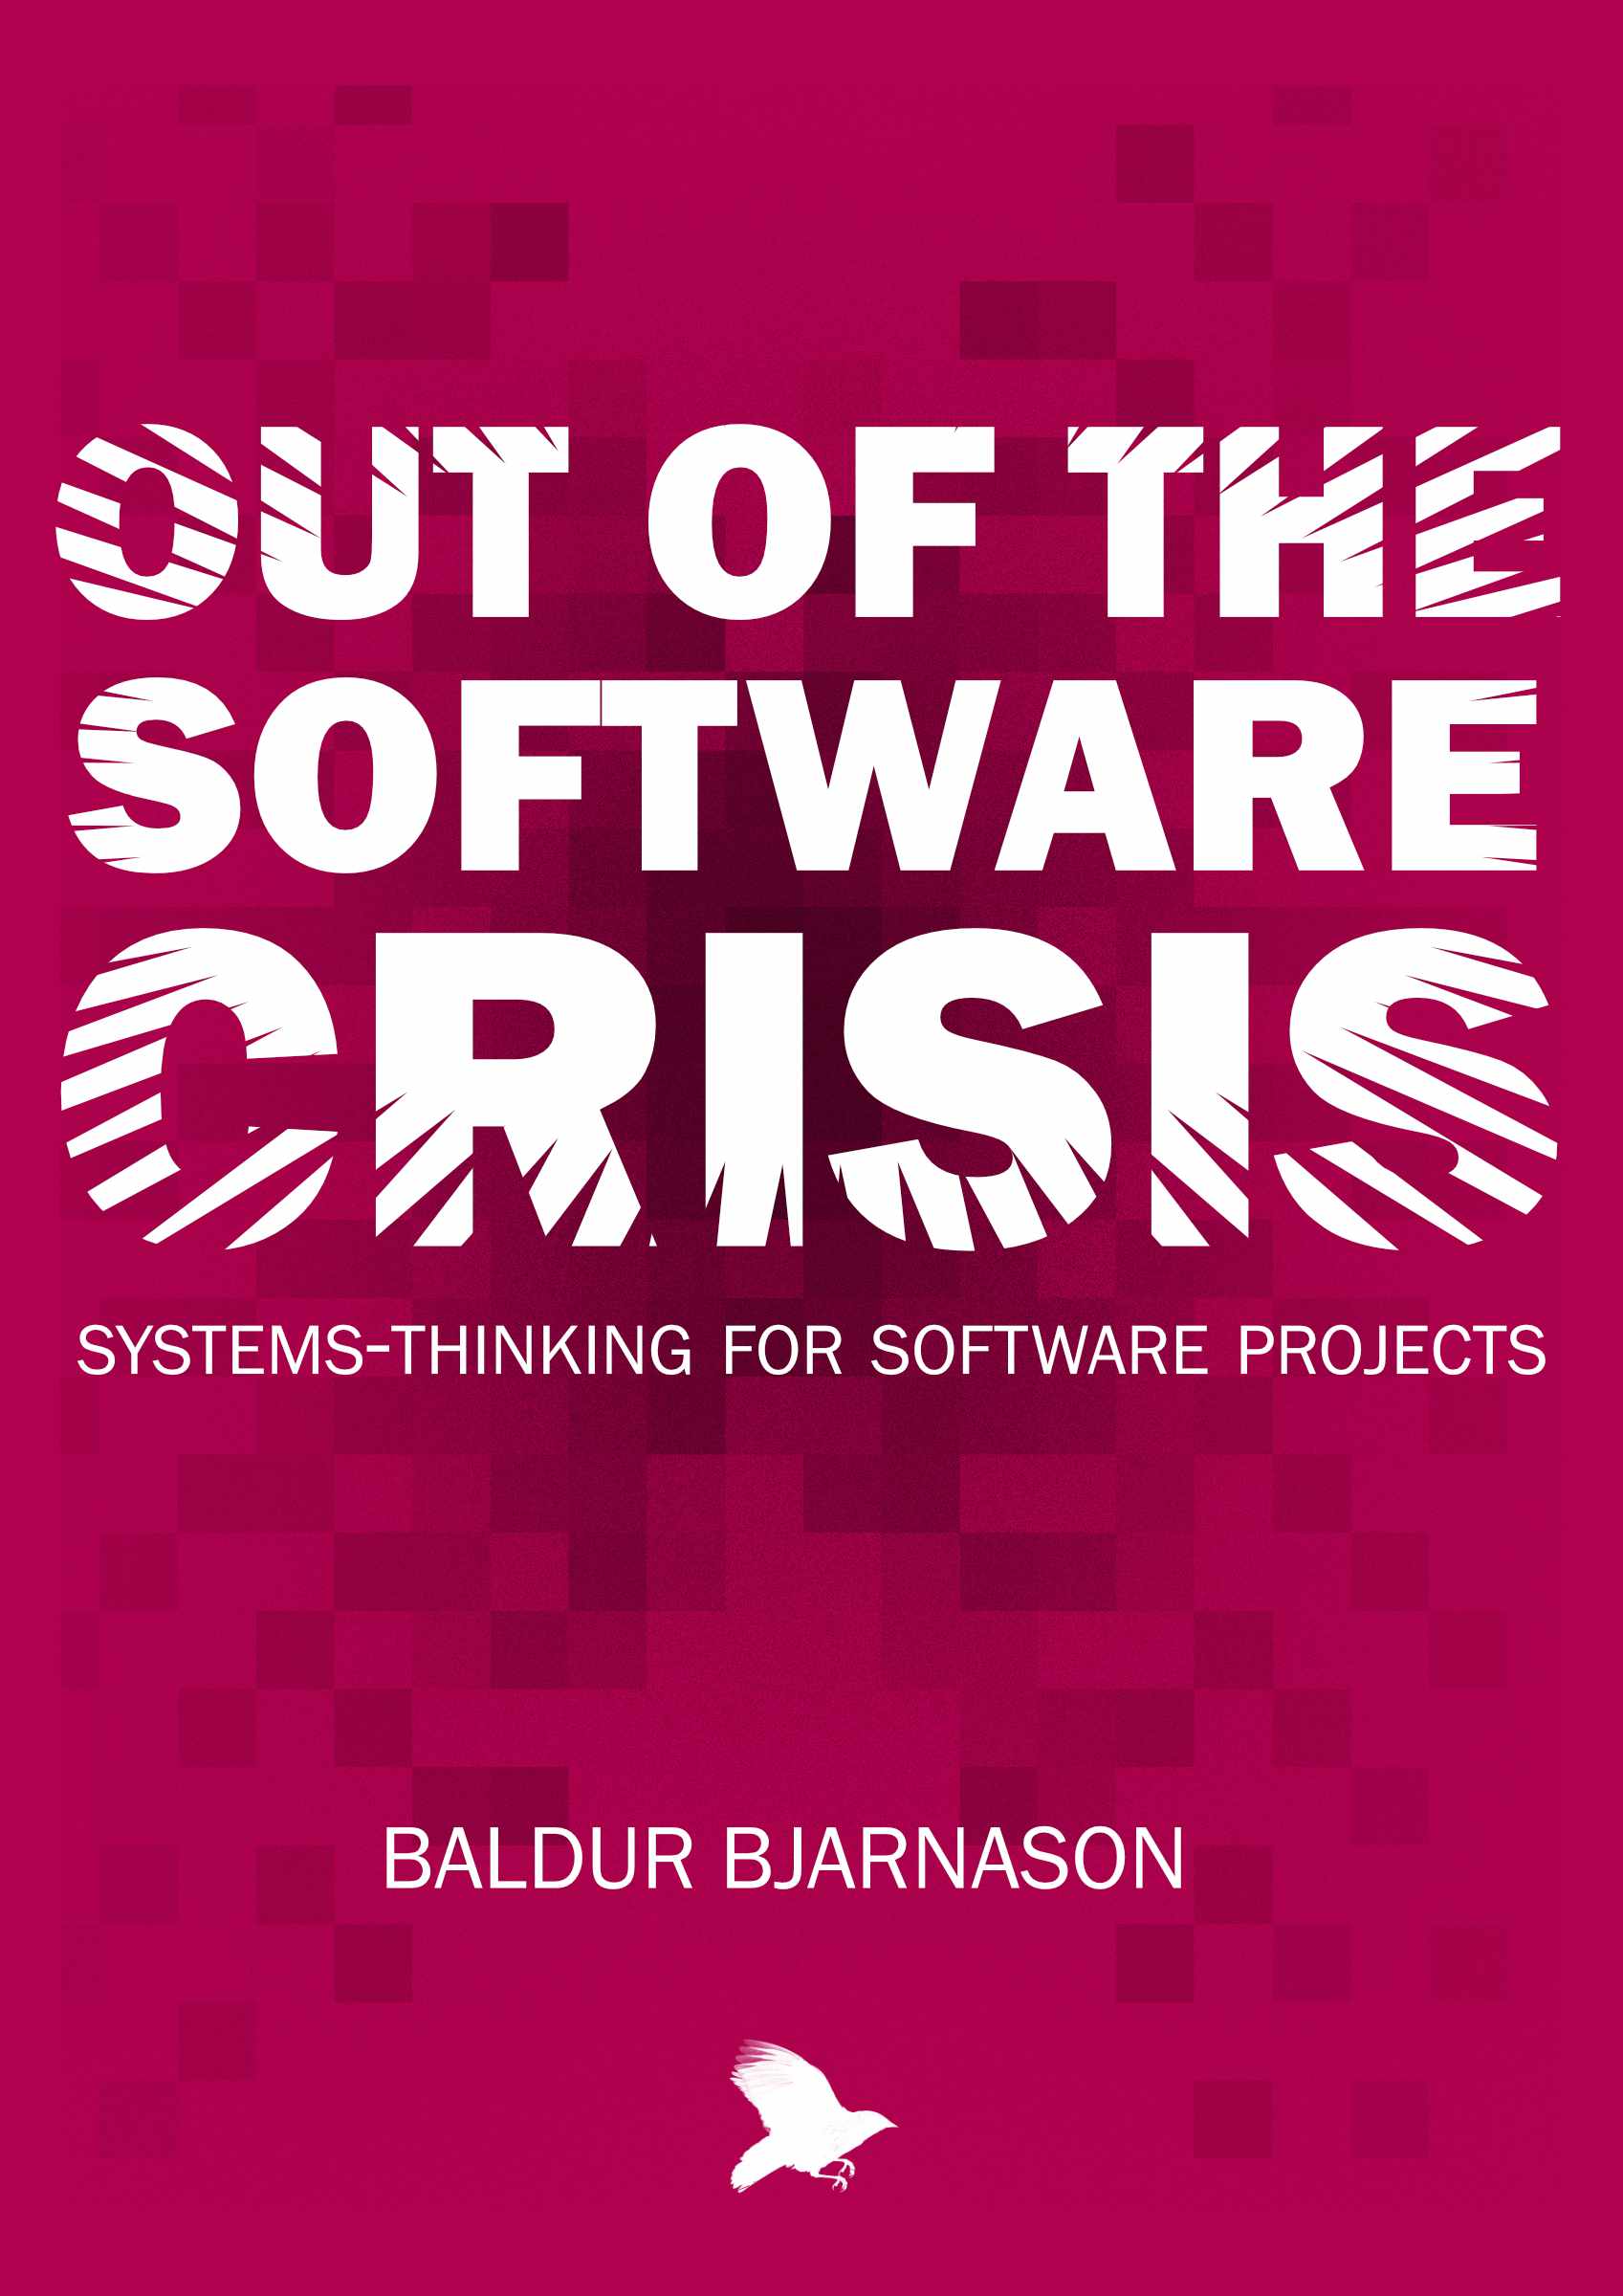 Out of the Software Crisis by Baldur Bjarnason